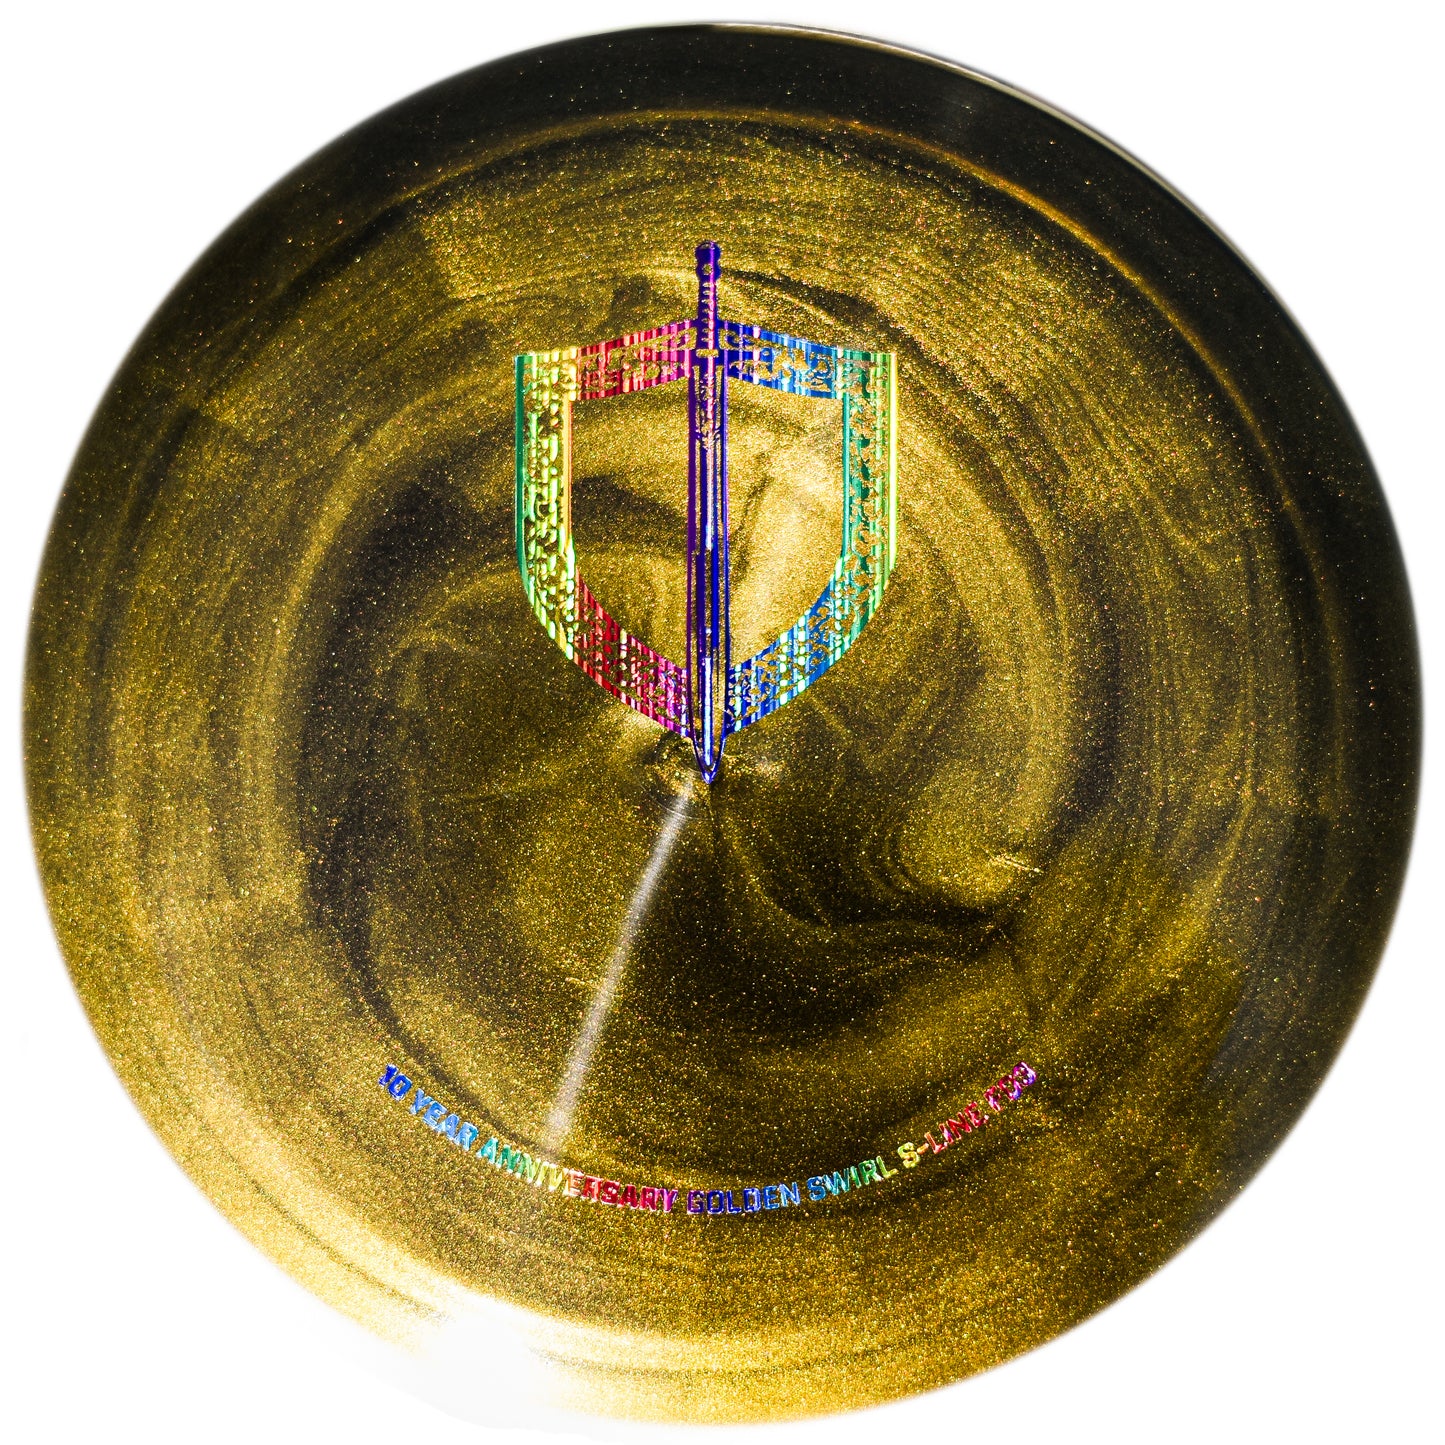 Golden Swirl FD3 10th Anniversary